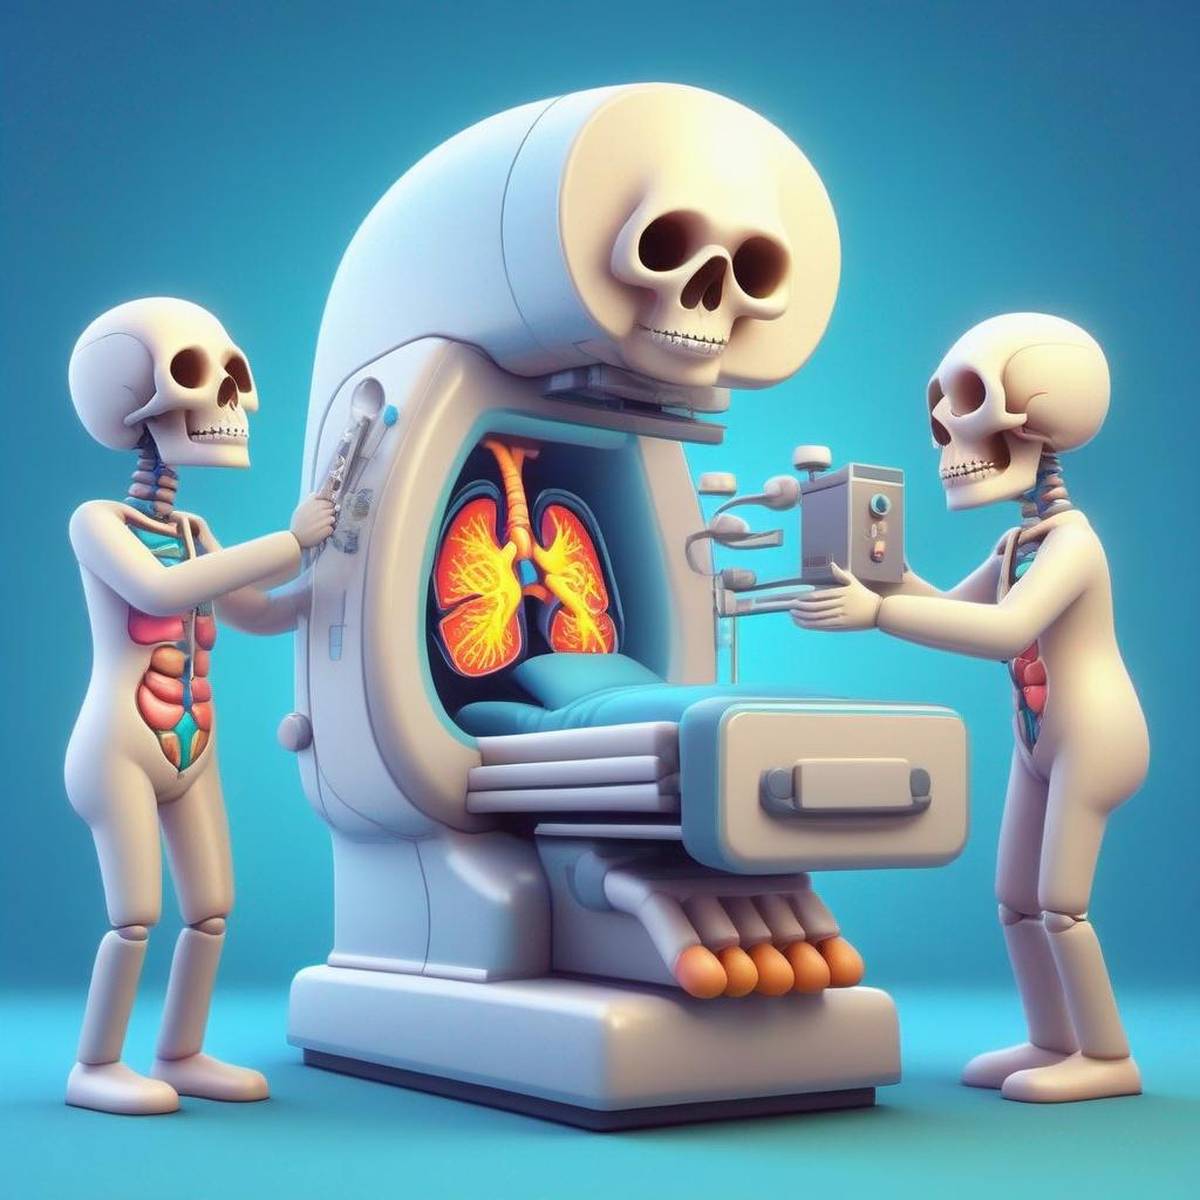 Radiology puns